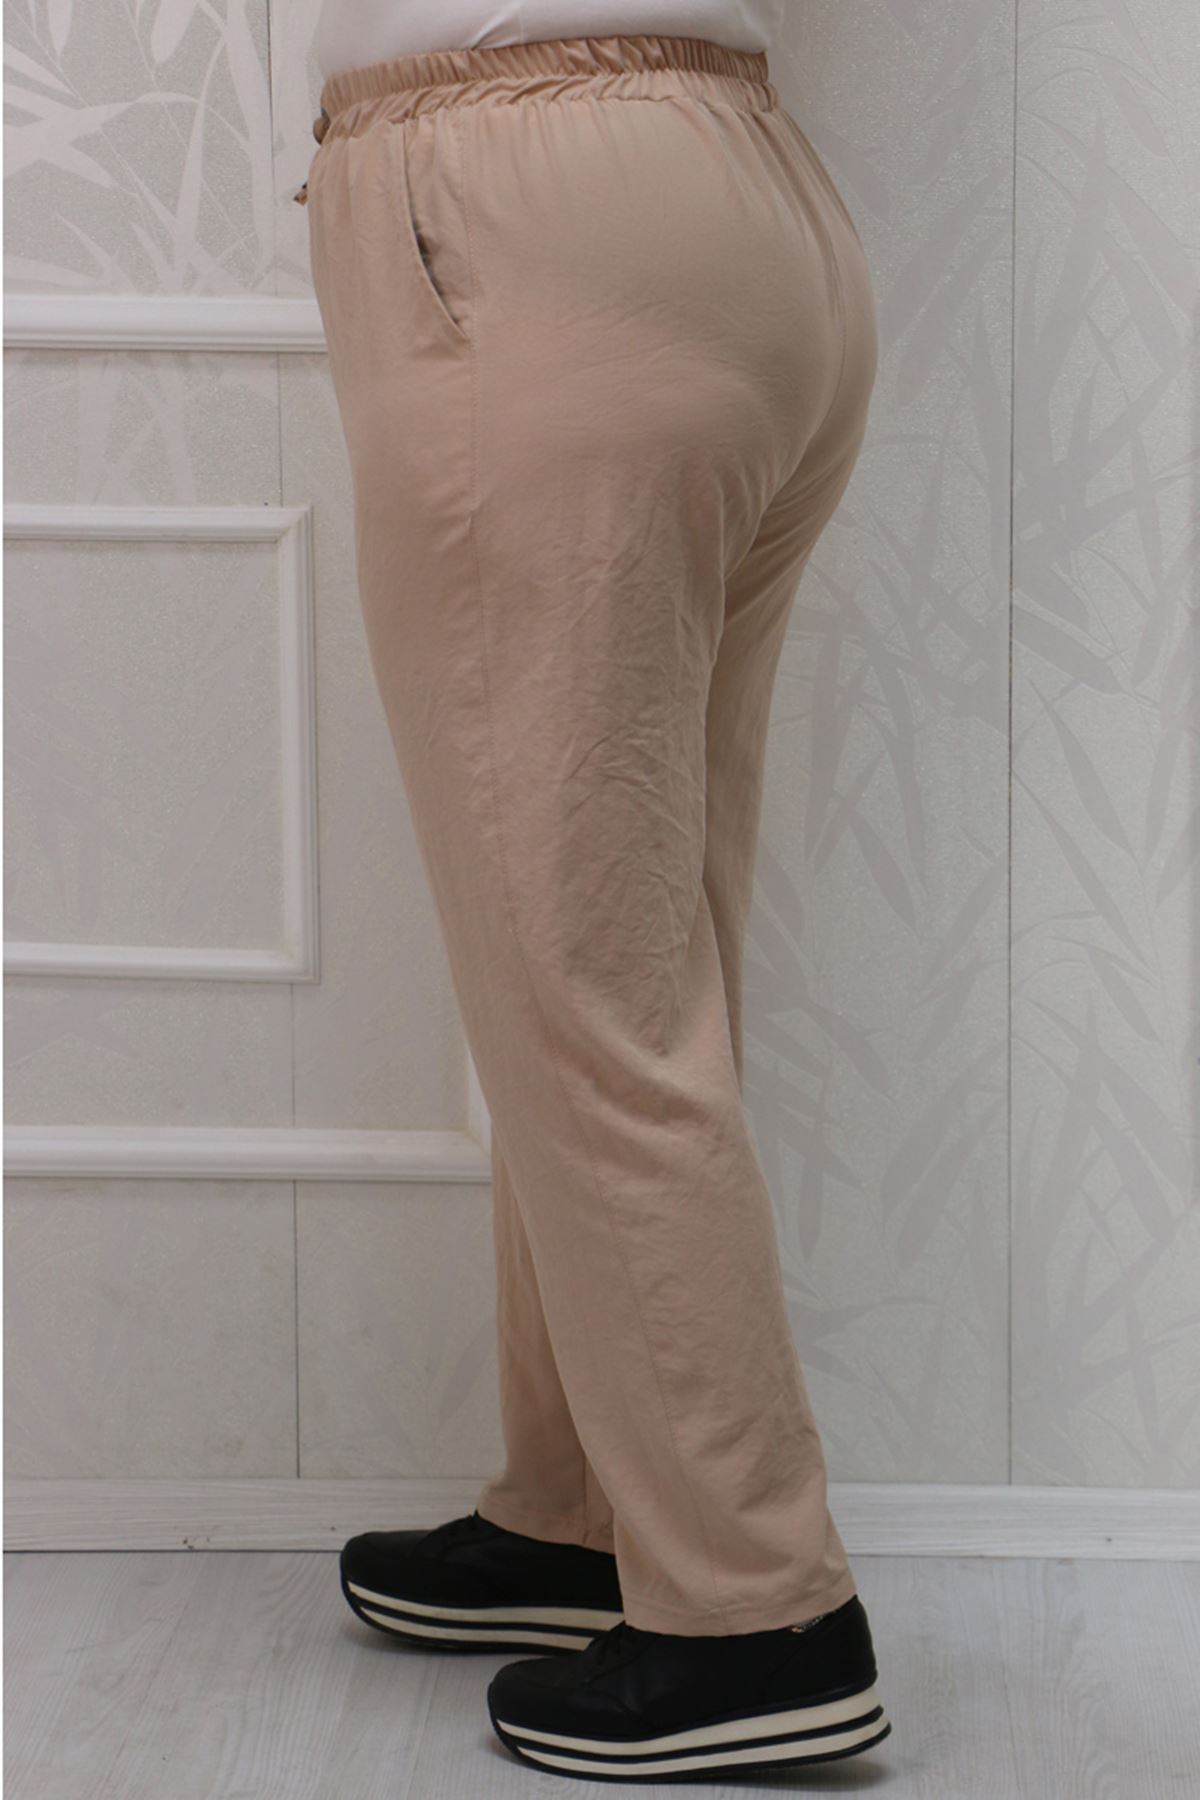 39024 Large Size Star Airobin Slim Leg Pants With Elastic Waist - Beige